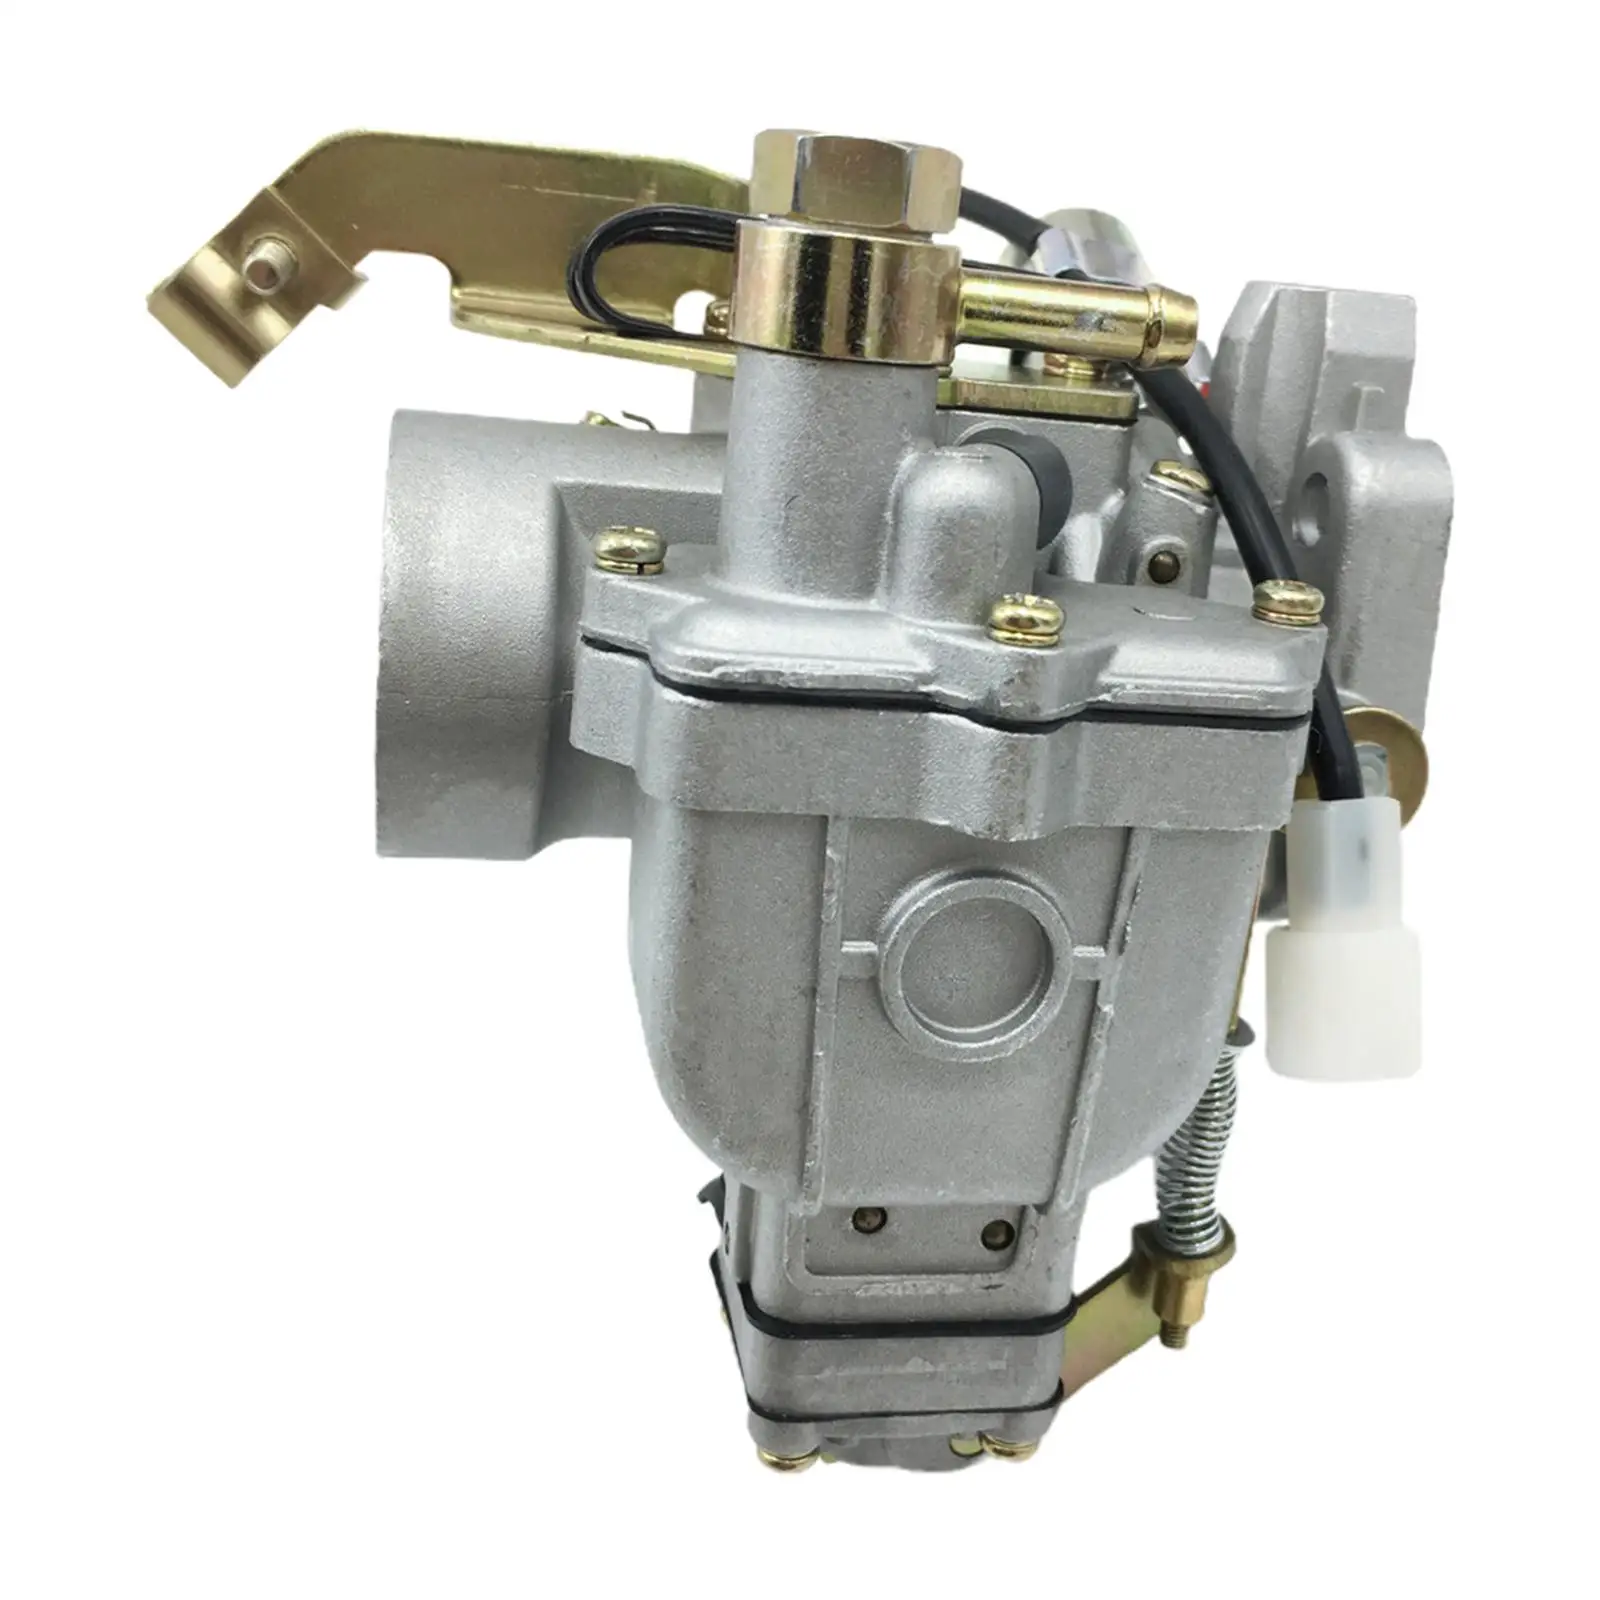 

Carburetor Carb Replace Parts Fits for 650cc-800cc Go Karts Buggy Premium